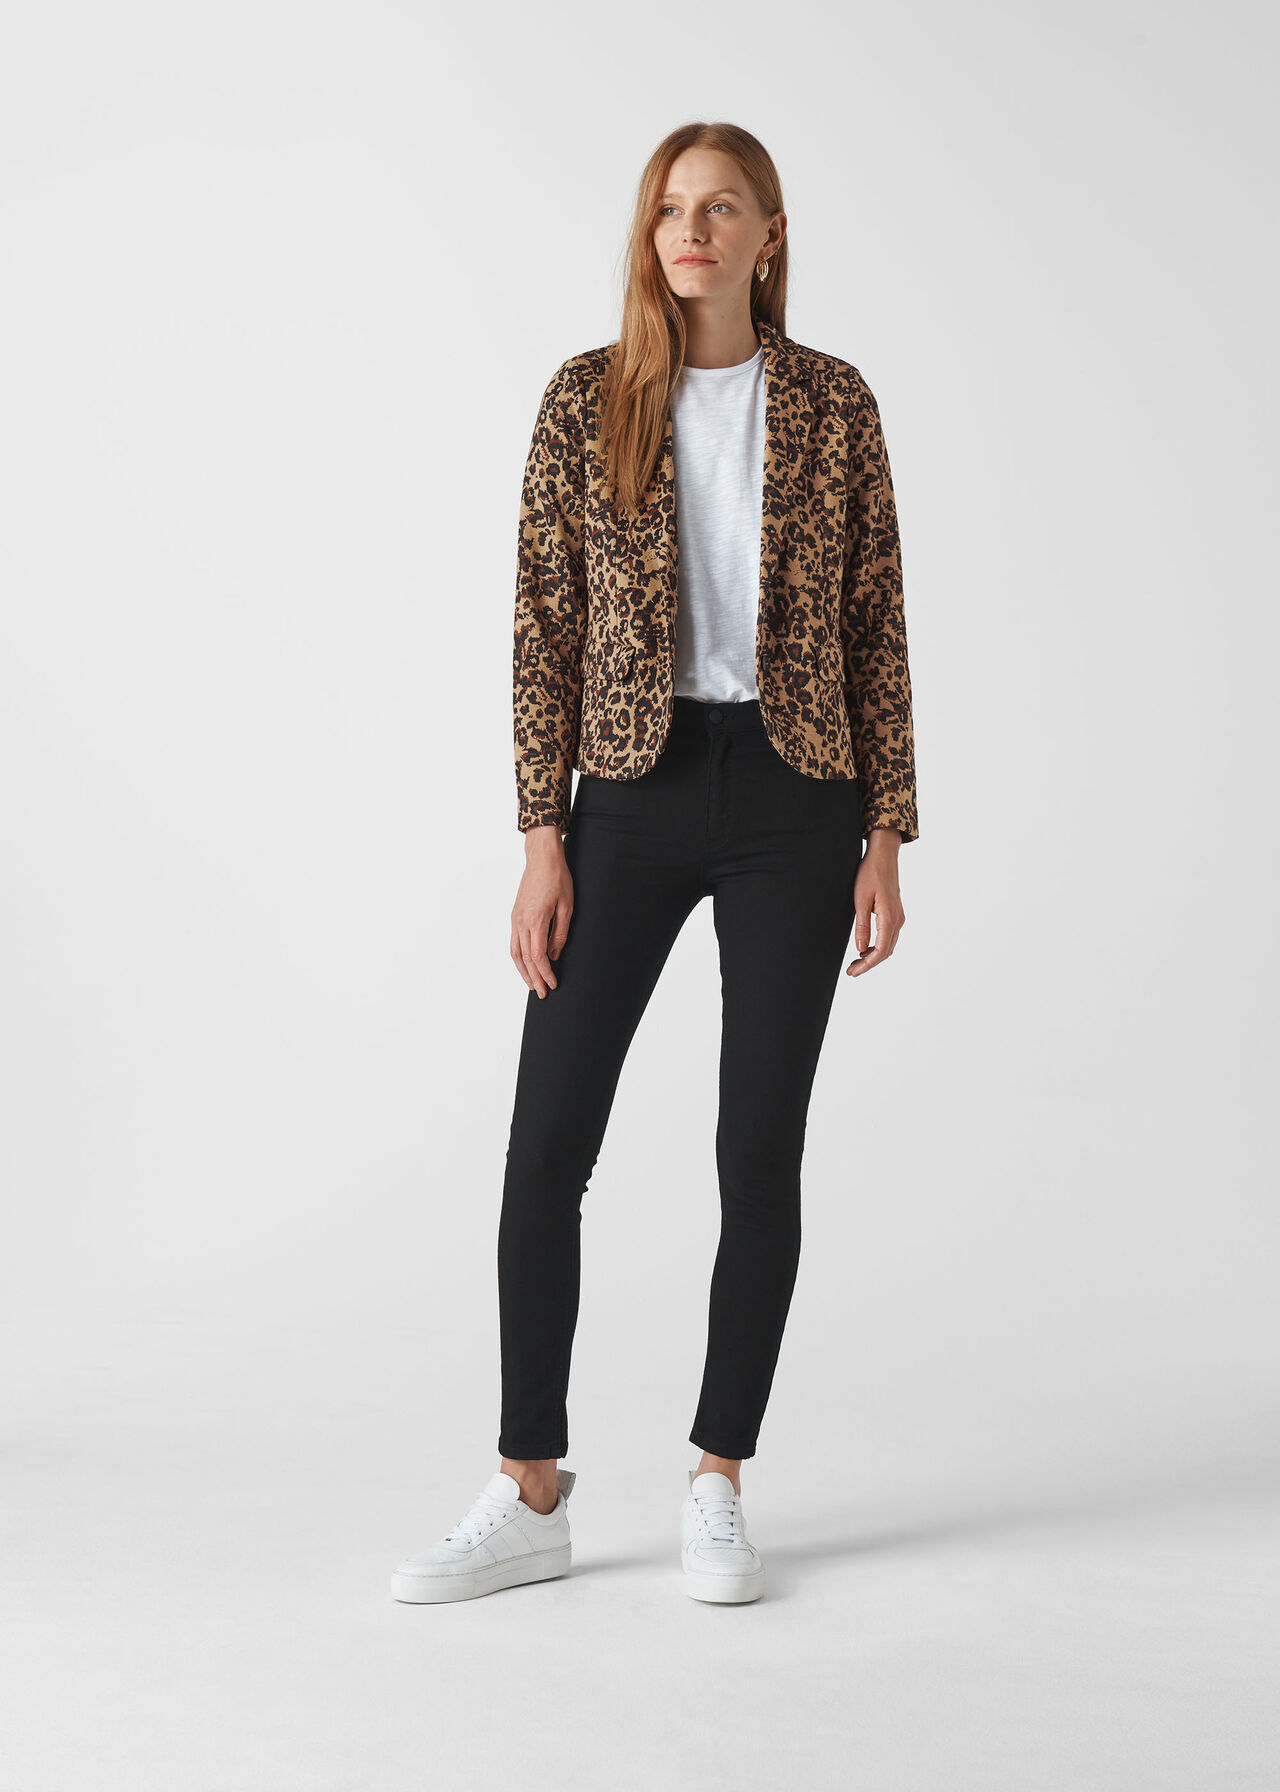 Leopard Print Animal Jacquard Jersey Jacket | WHISTLES |